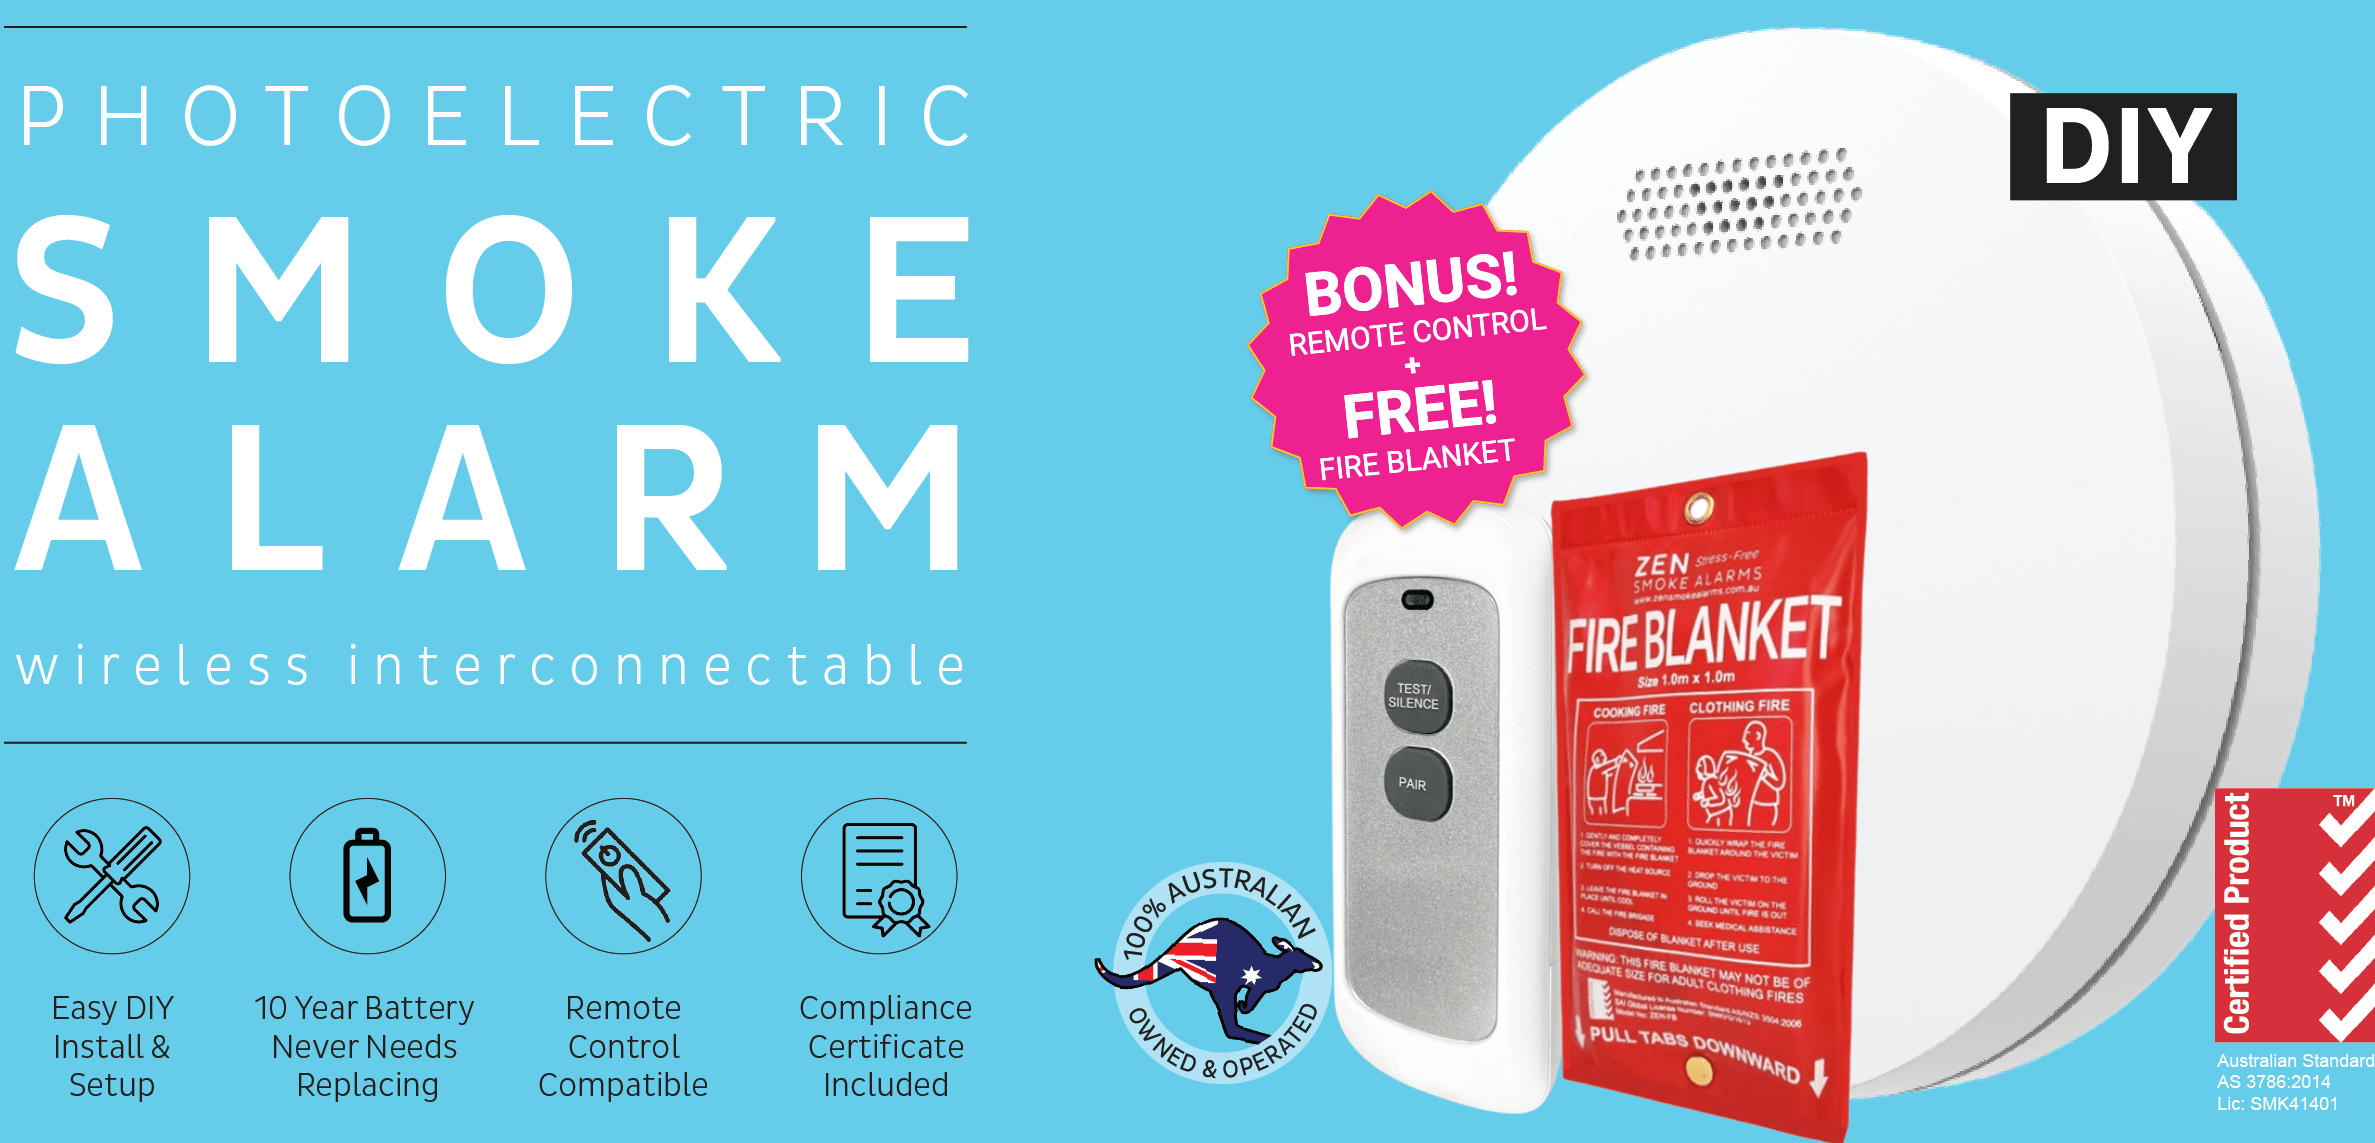 ZEN Photoelectric Wireless Interconnected Smoke Alarms - Bonus Remote & Free Fire Blanket